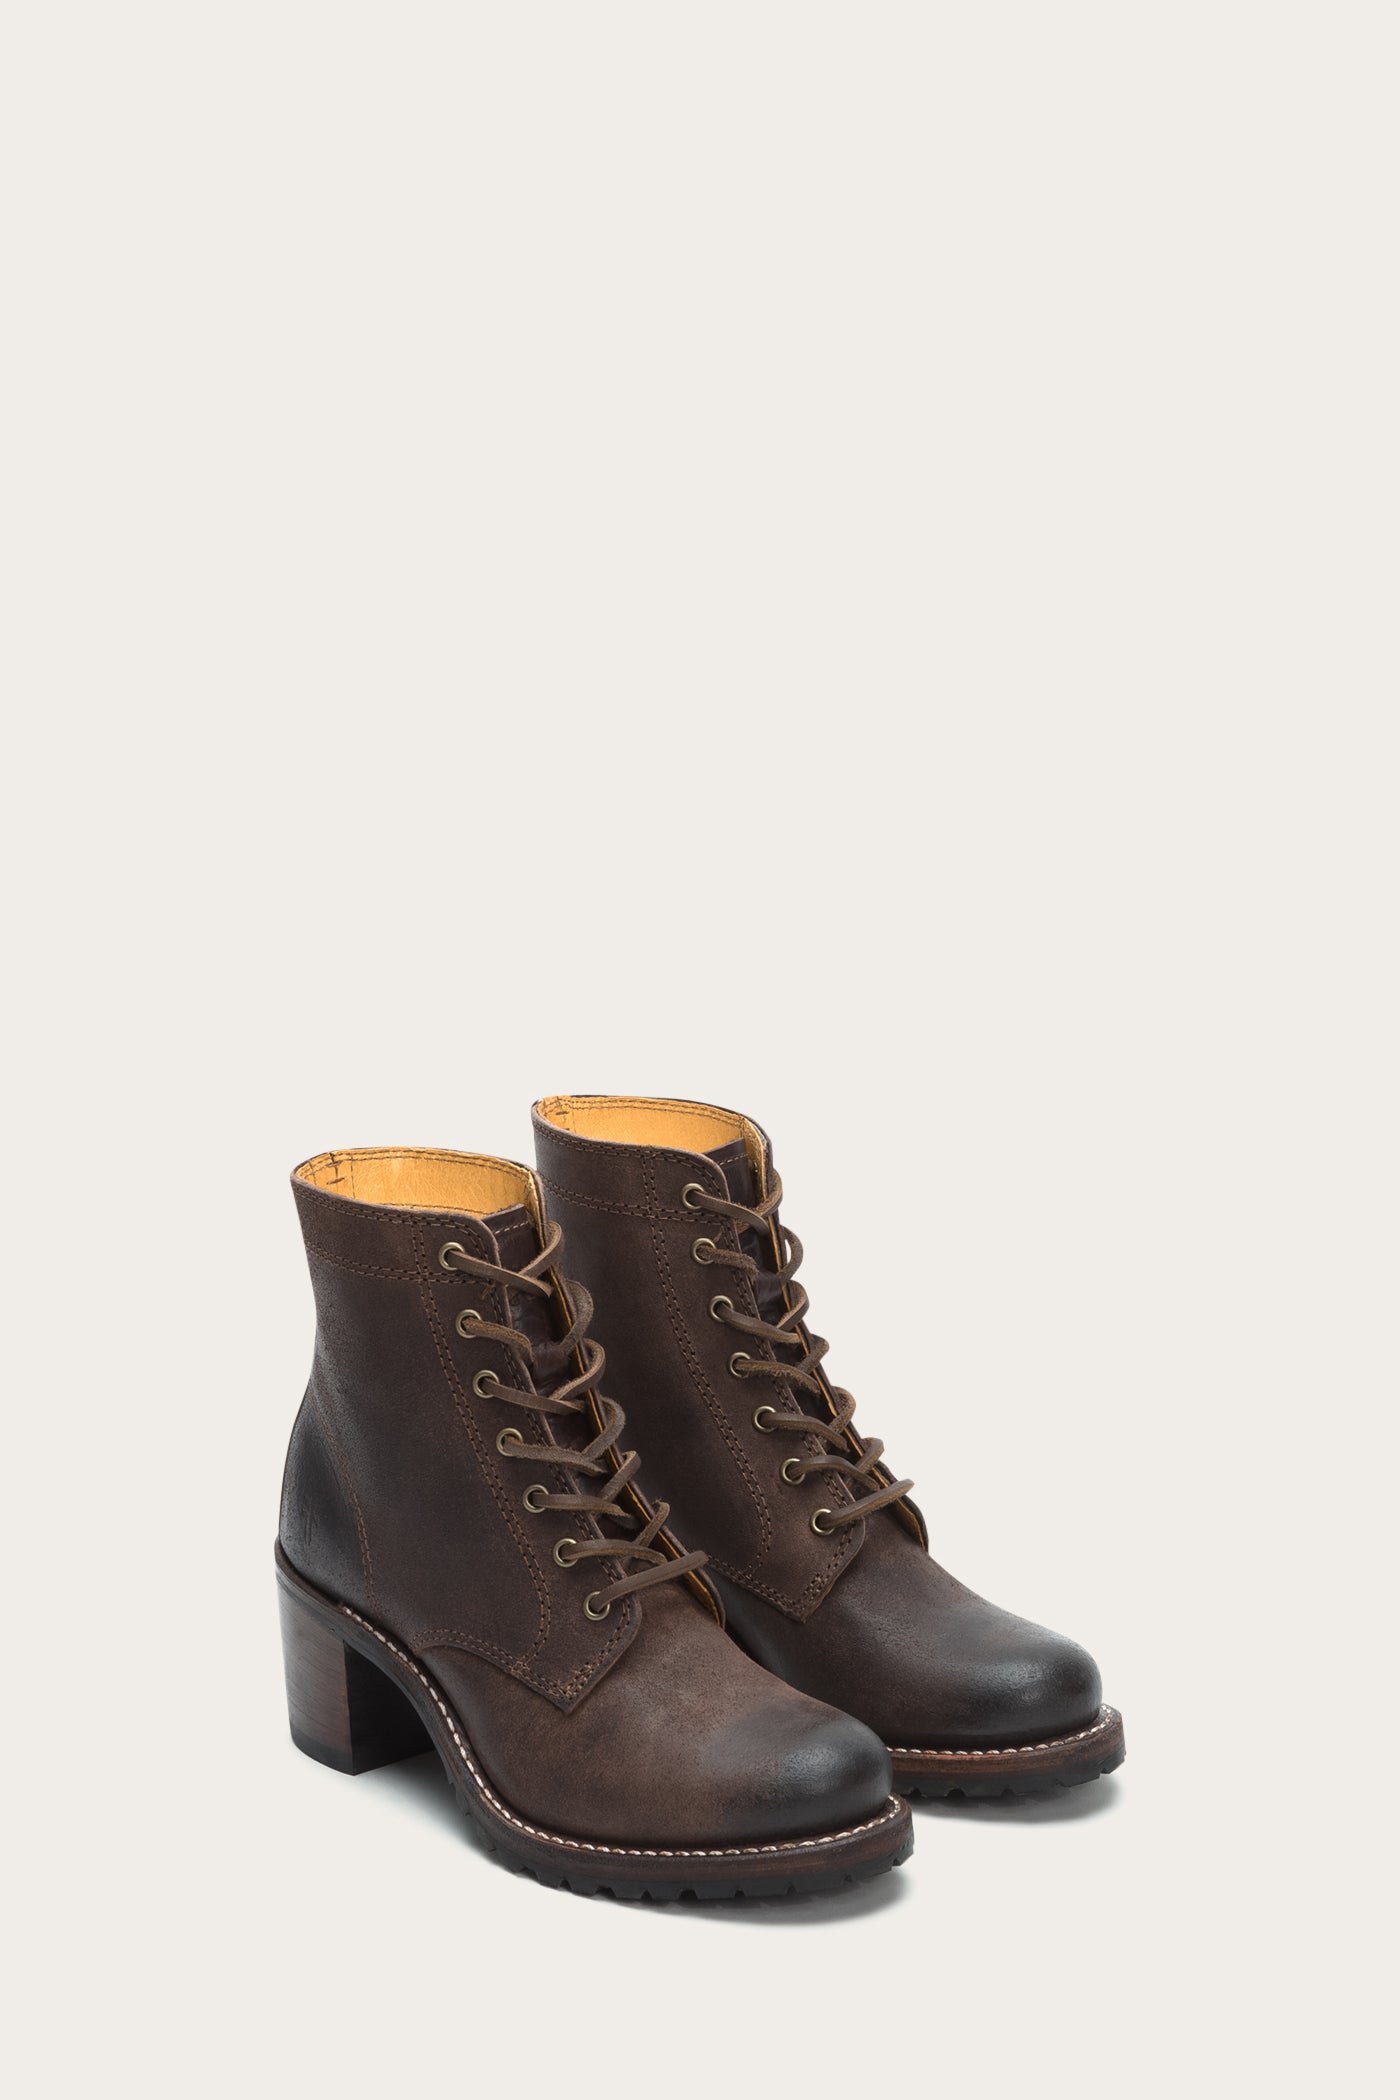 frye sabrina combat heeled boots